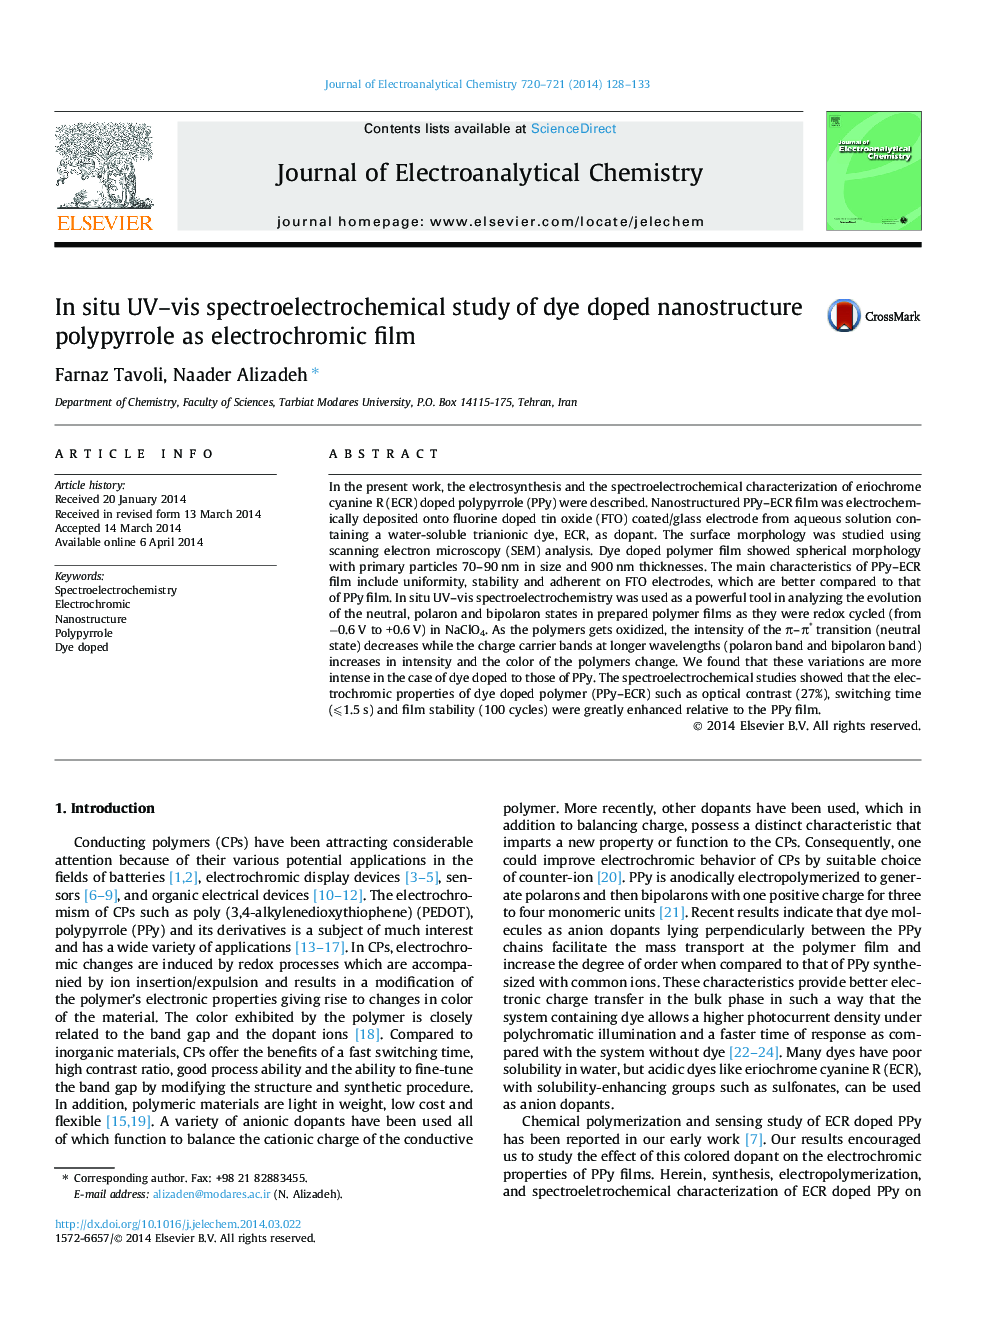 In situ UV–vis spectroelectrochemical study of dye doped nanostructure polypyrrole as electrochromic film